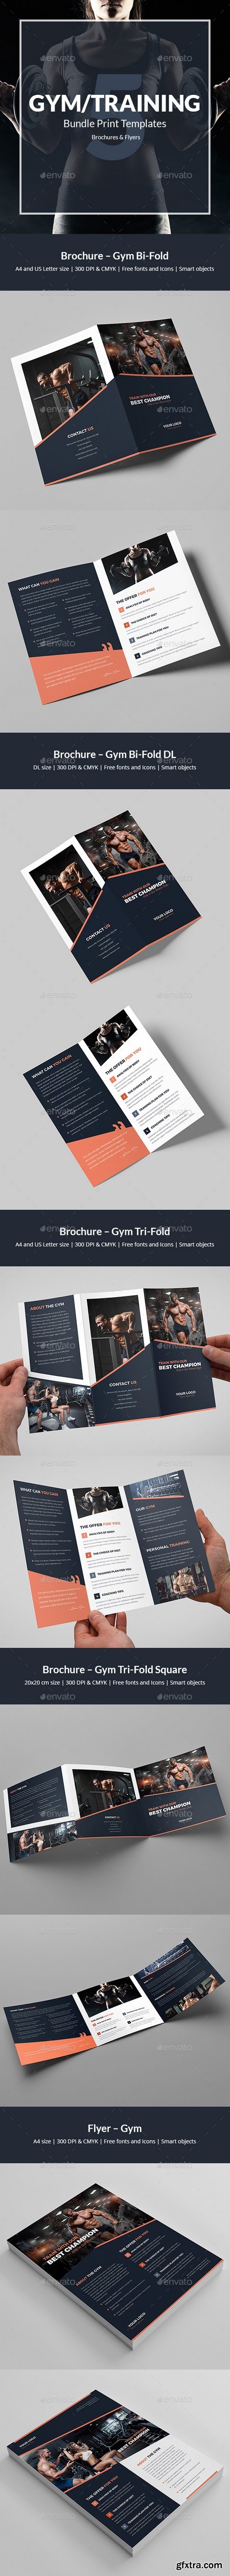 Graphicriver - Gym – Bundle Print Templates 5 in 1 21262640